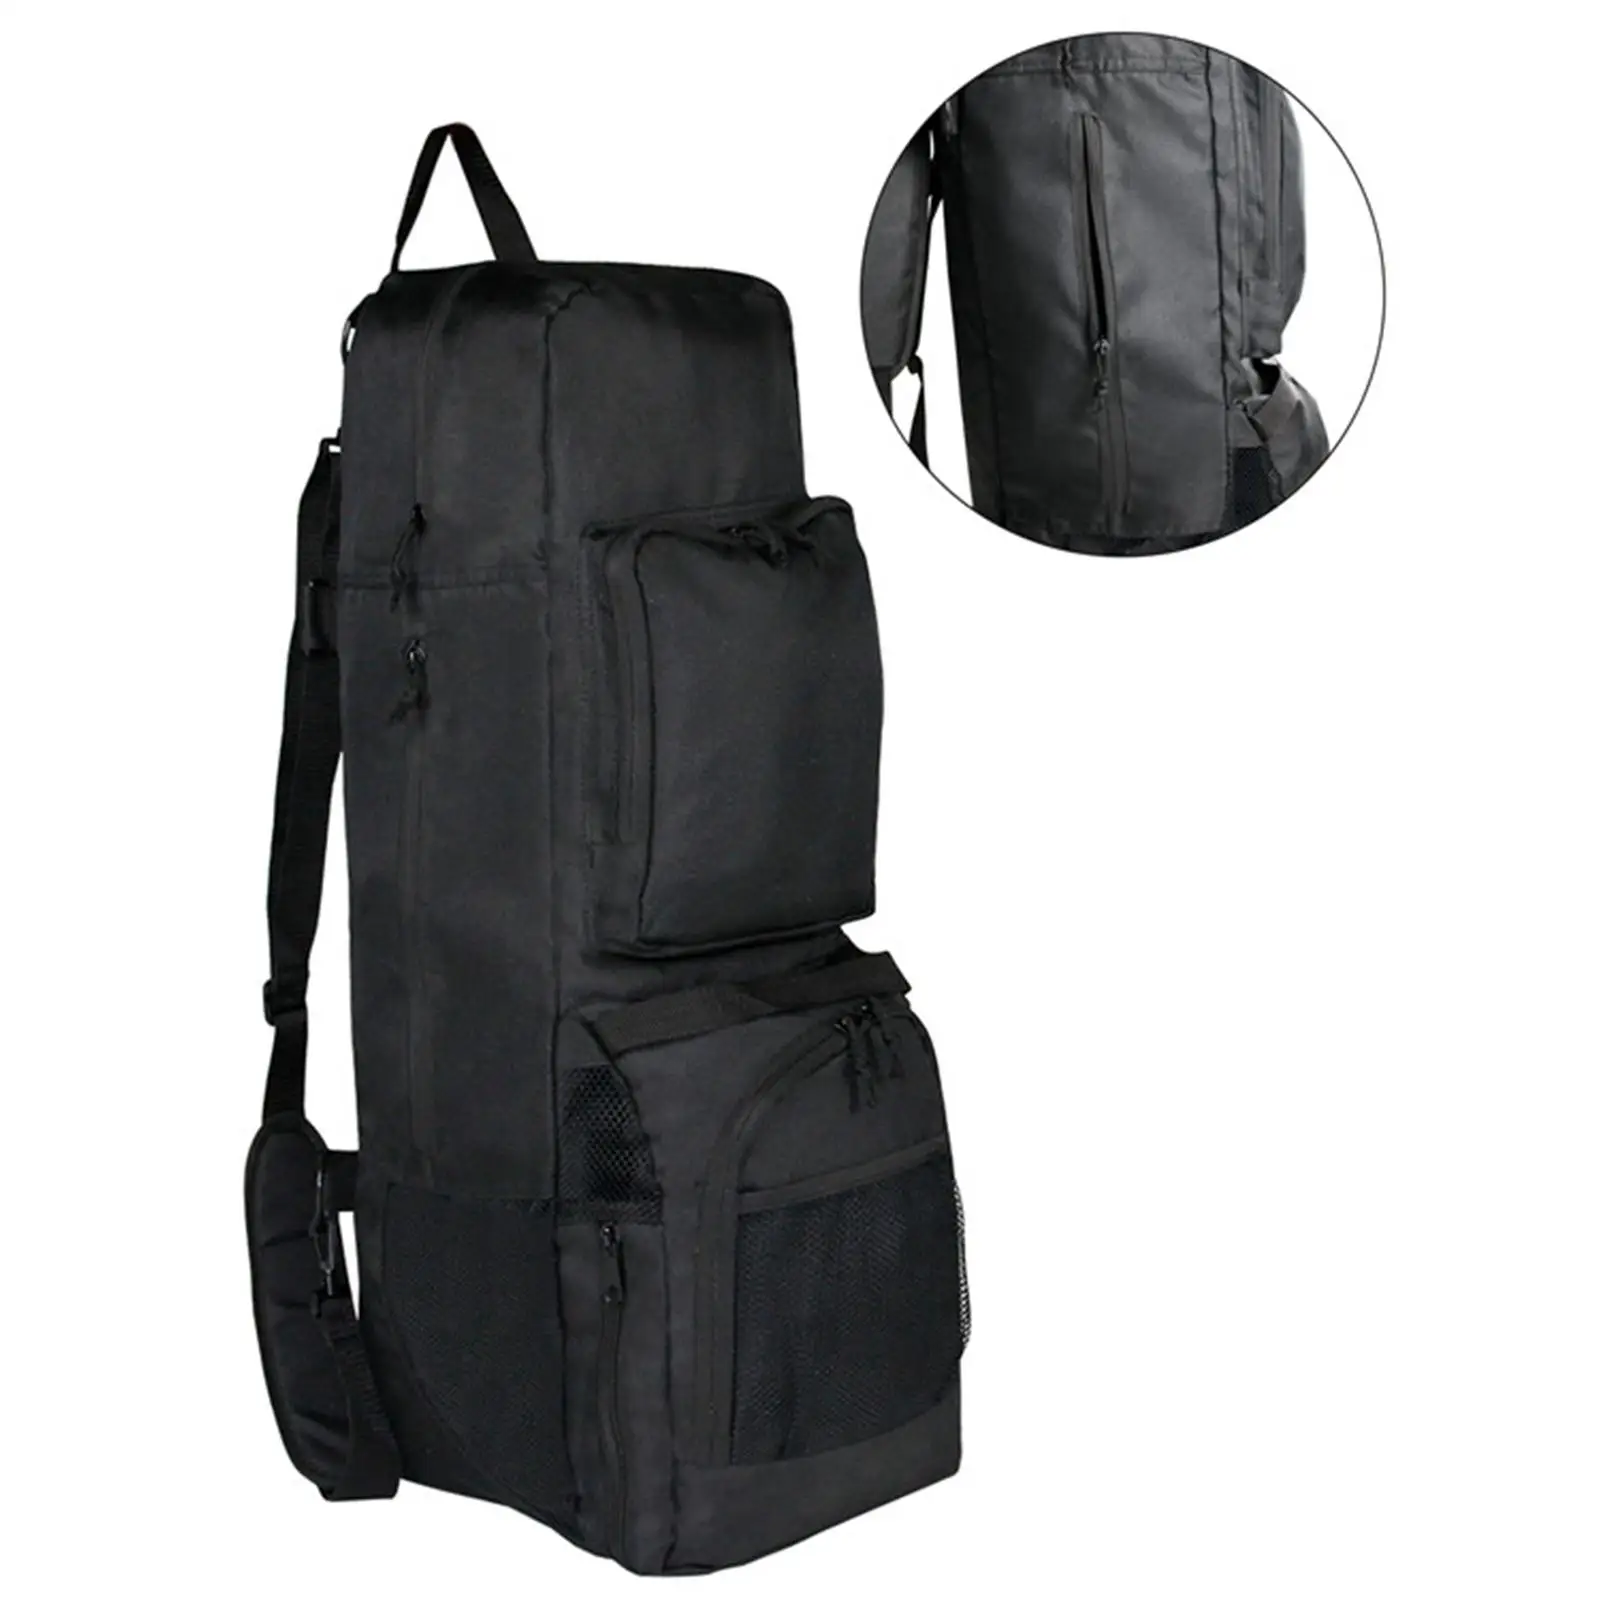 Yoga Bag Storage Bag Multifunction Travel Duffel Bag Zipper Closure Gym Bag Fitness Bag for Camping Outdoor Home Fitness Sports